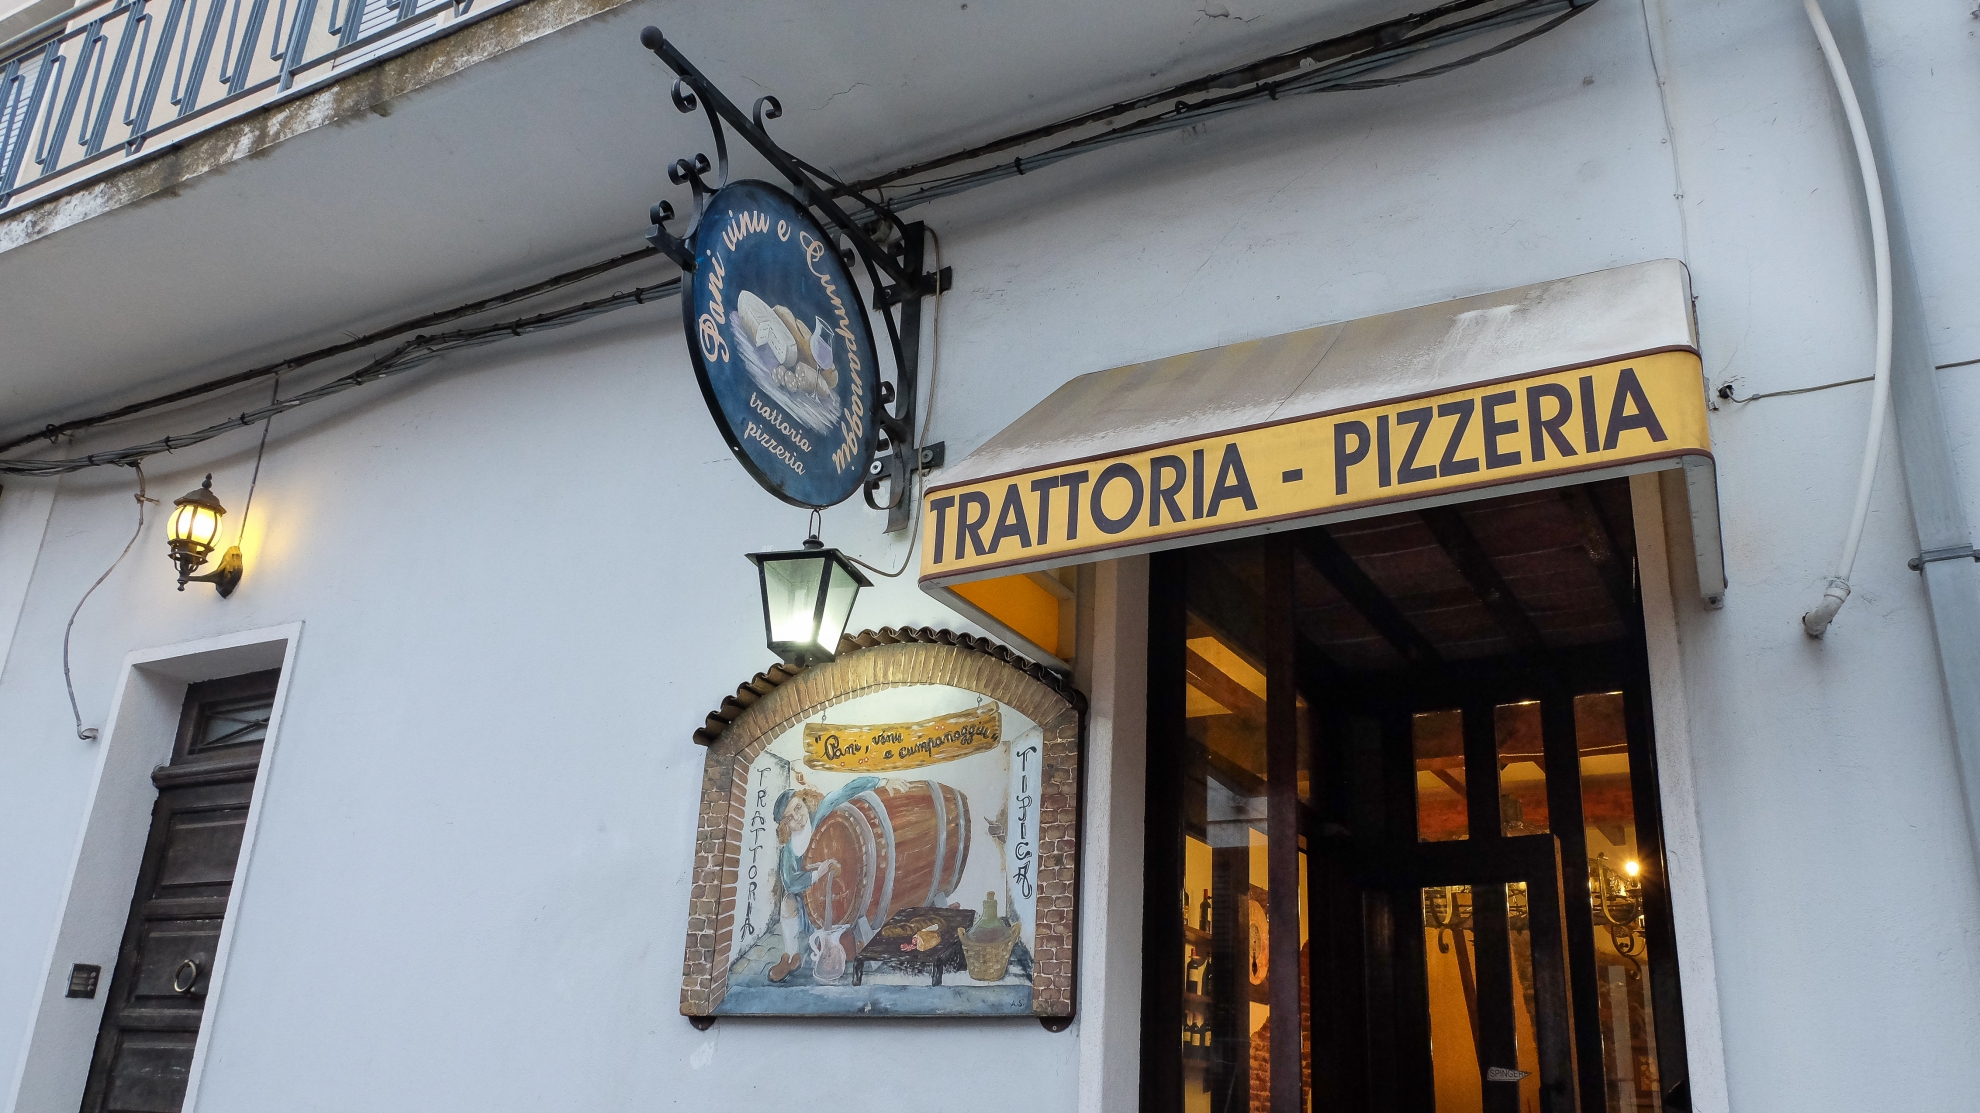 Pane Vino e Cumpanaggiu - Pizzeria Ristorante, Santa Venerina